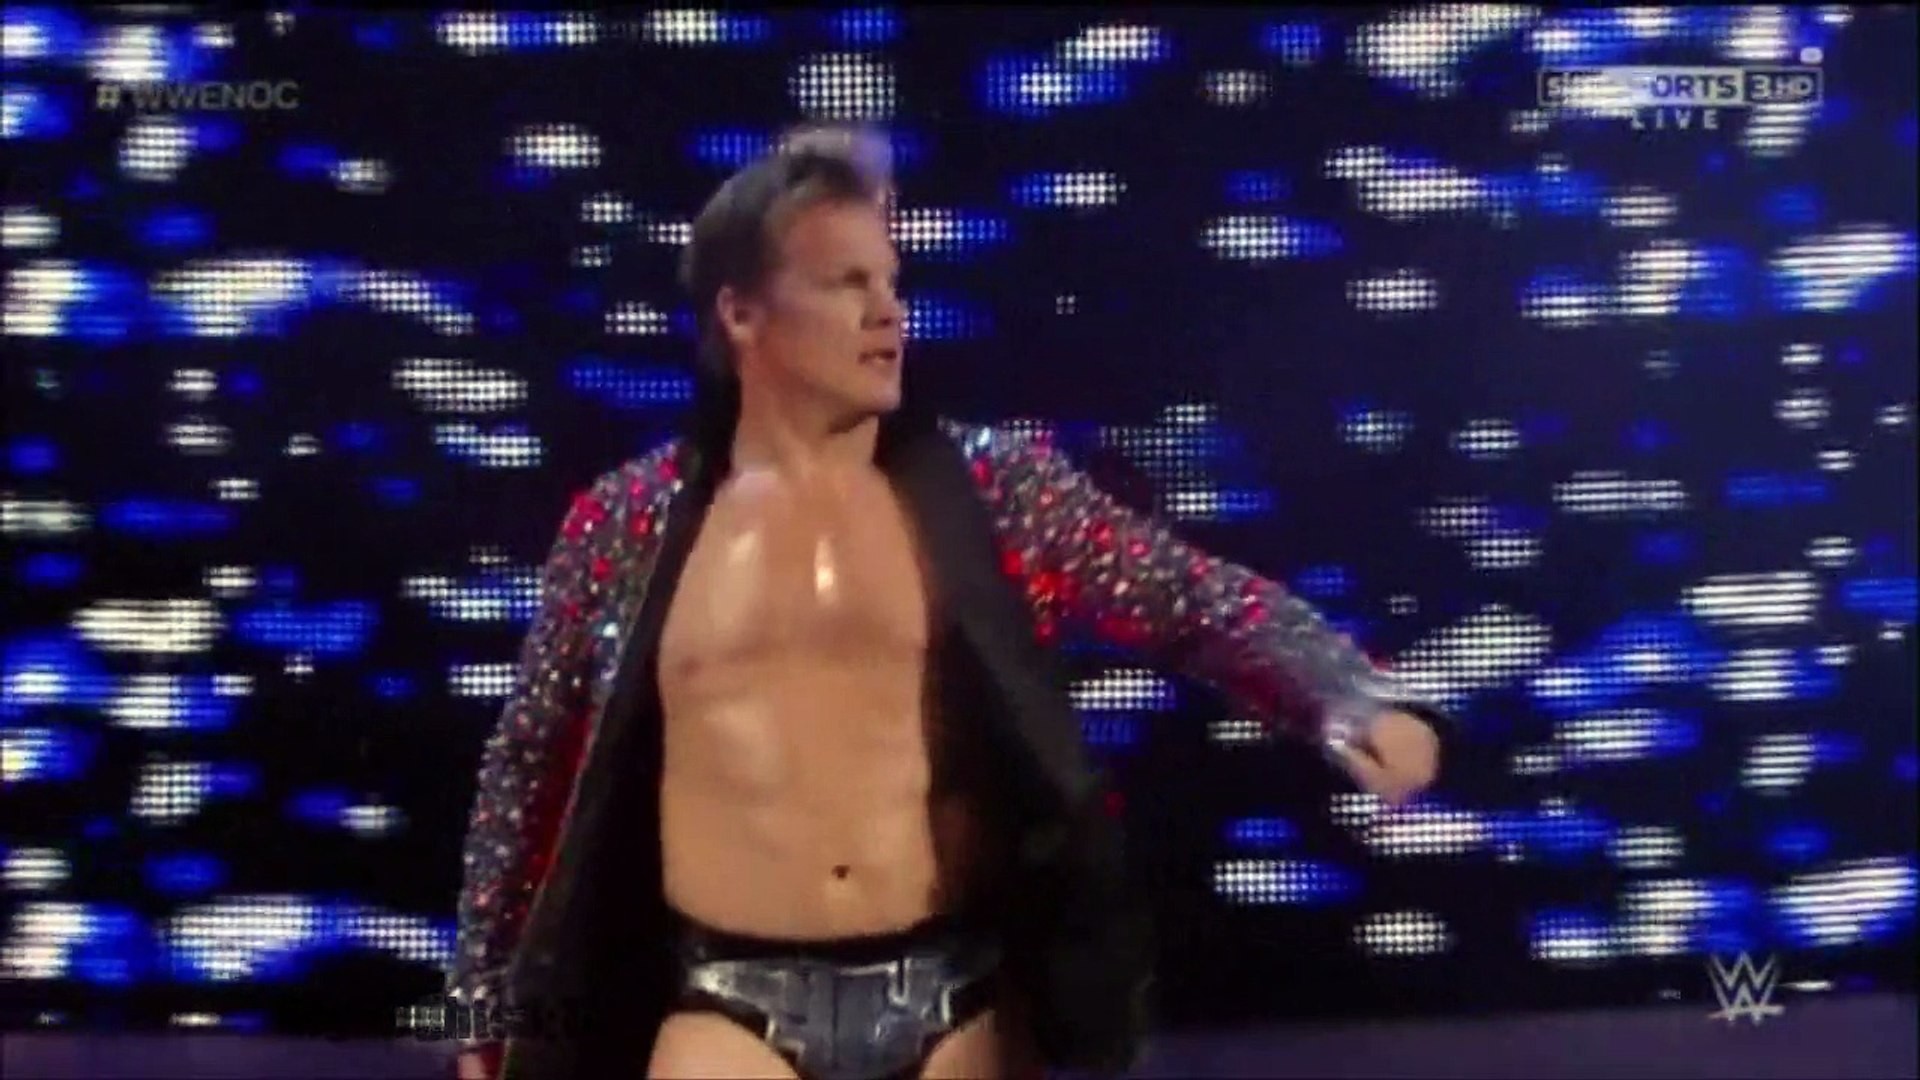 1920x1080 Chris Jericho vs. Randy Orton Highlights - HD Night Of Champions 2014 -  video dailymotion